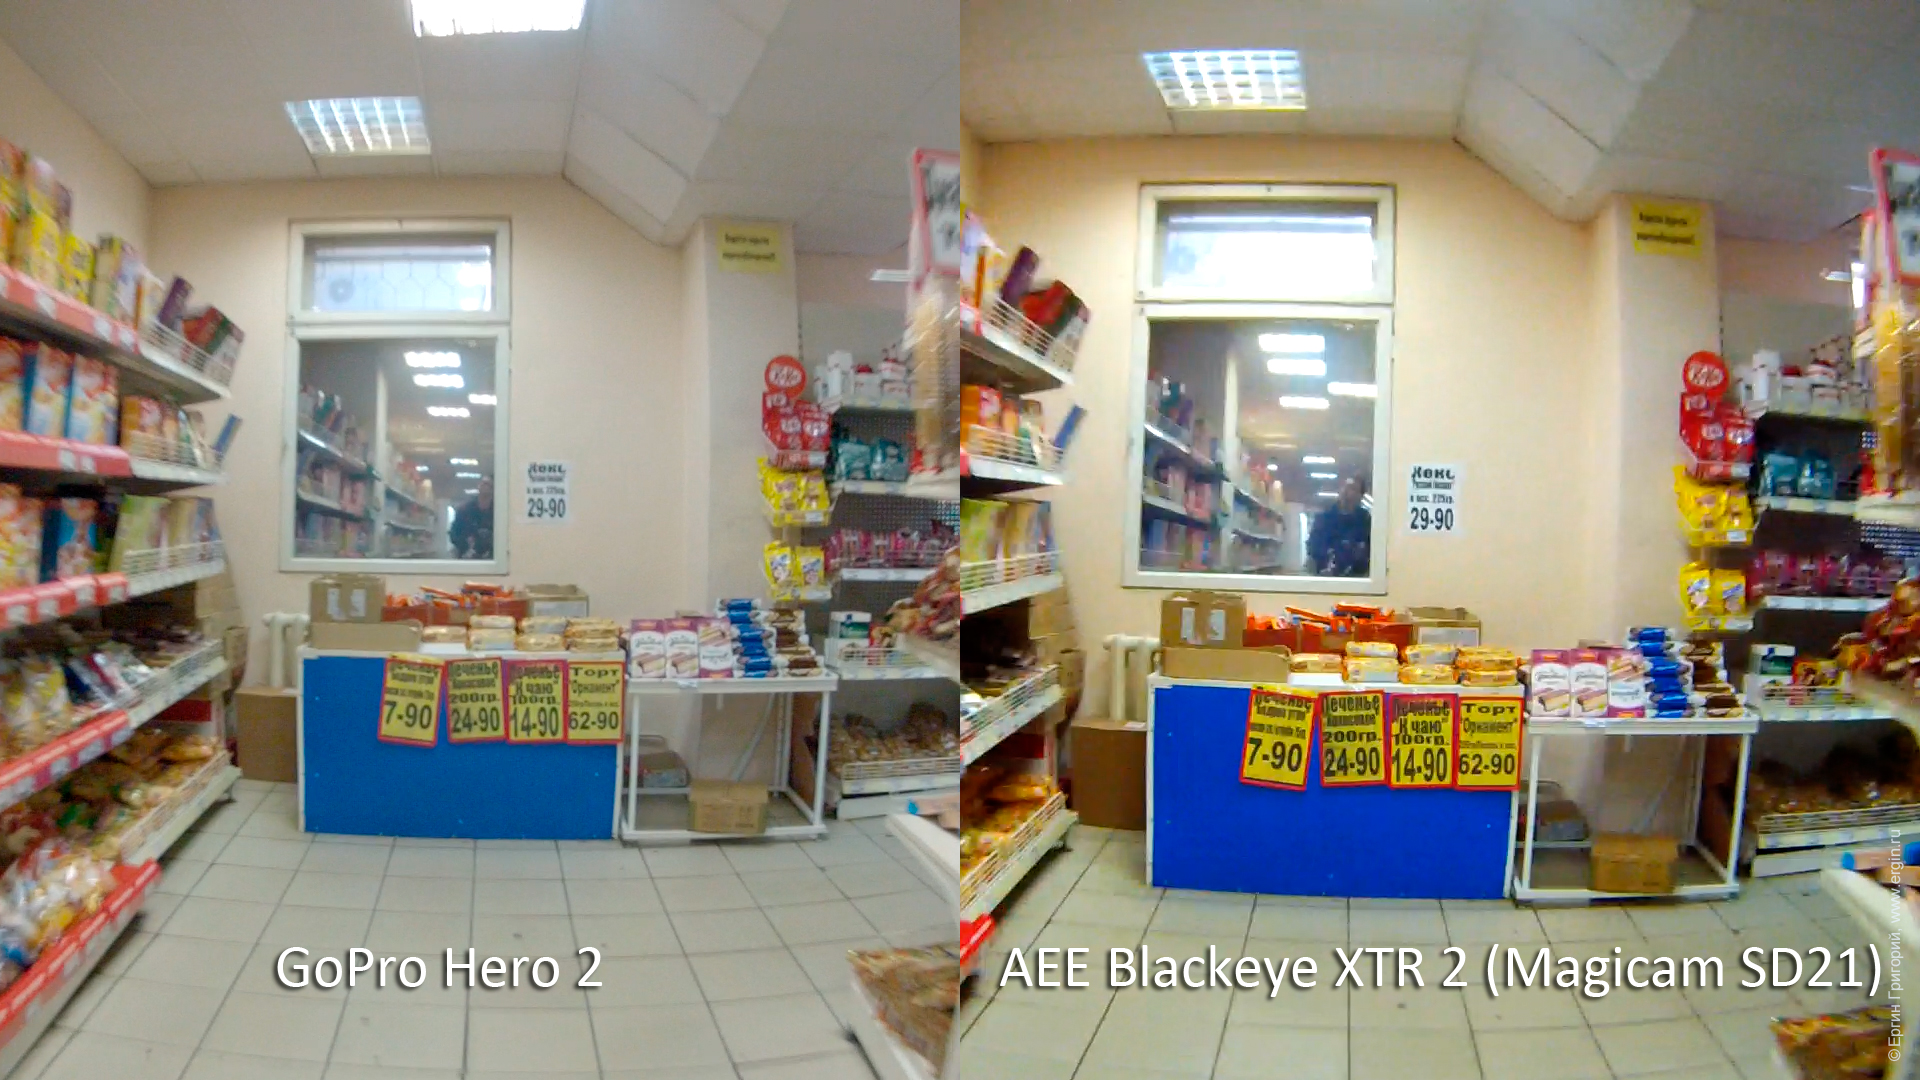 AEE Blackeye XTR 2 (AEE Magicam SD21) vs GoPro Hero 2: возможность прочитать ценники